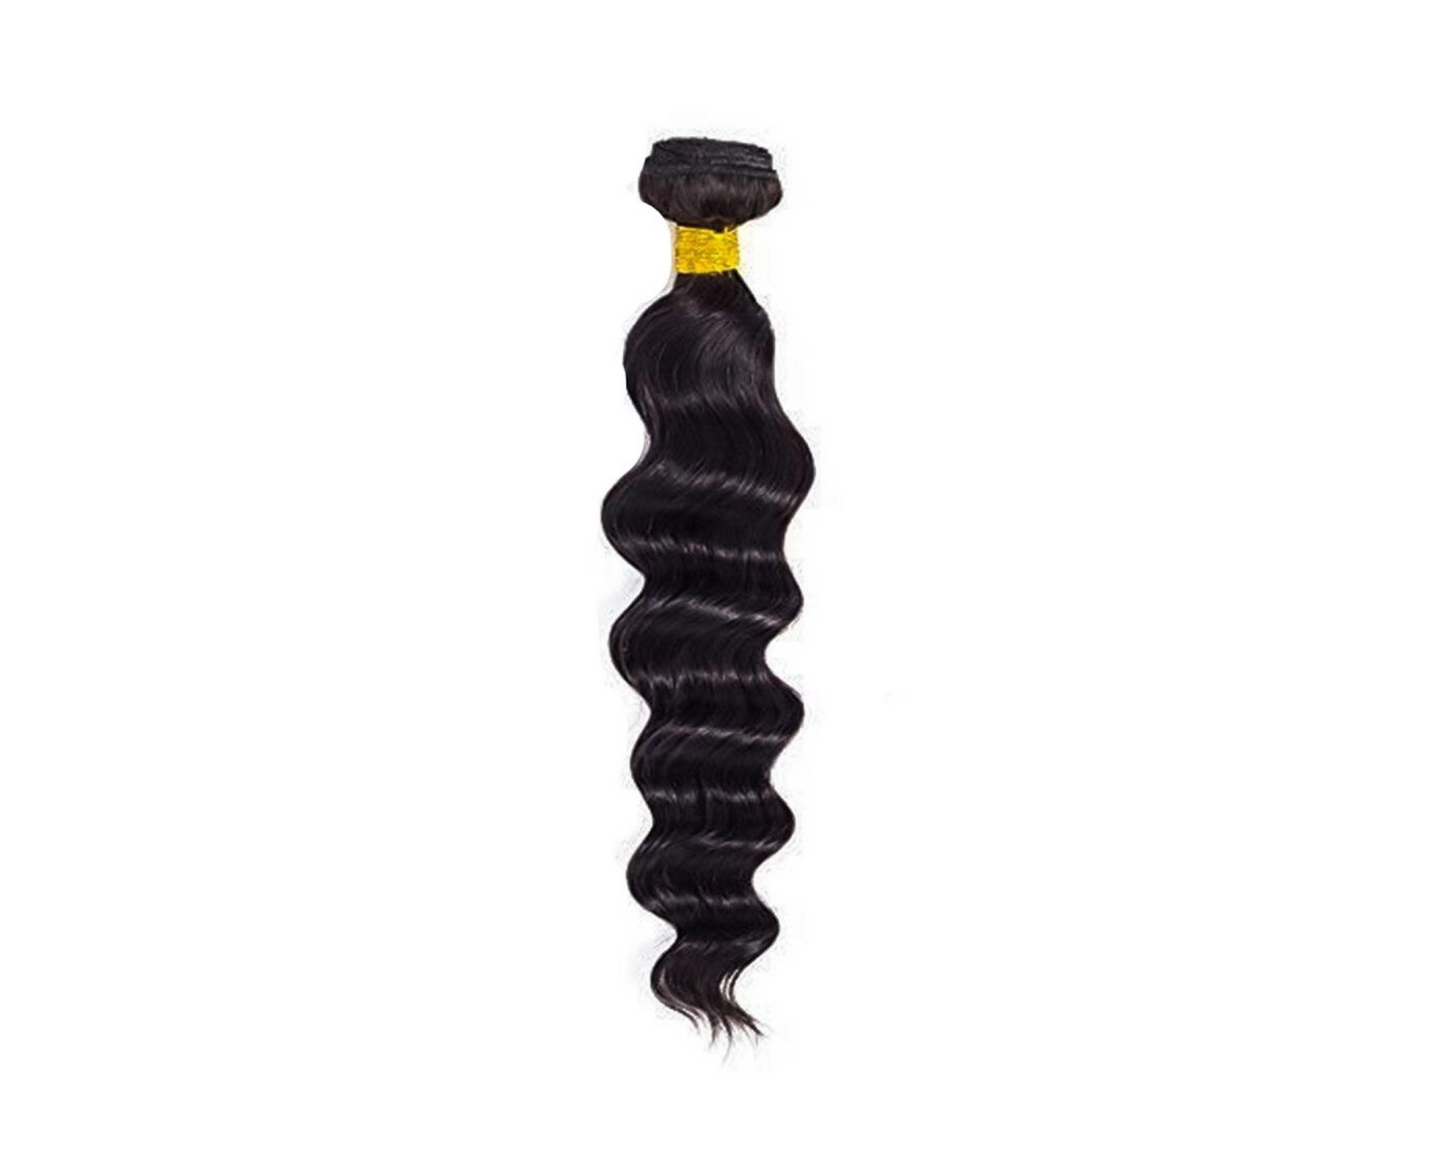 10A Grade 1/3/4 Loose Body Wave Weave Peruvian Human Hair Extension Bu - Walbiz.com